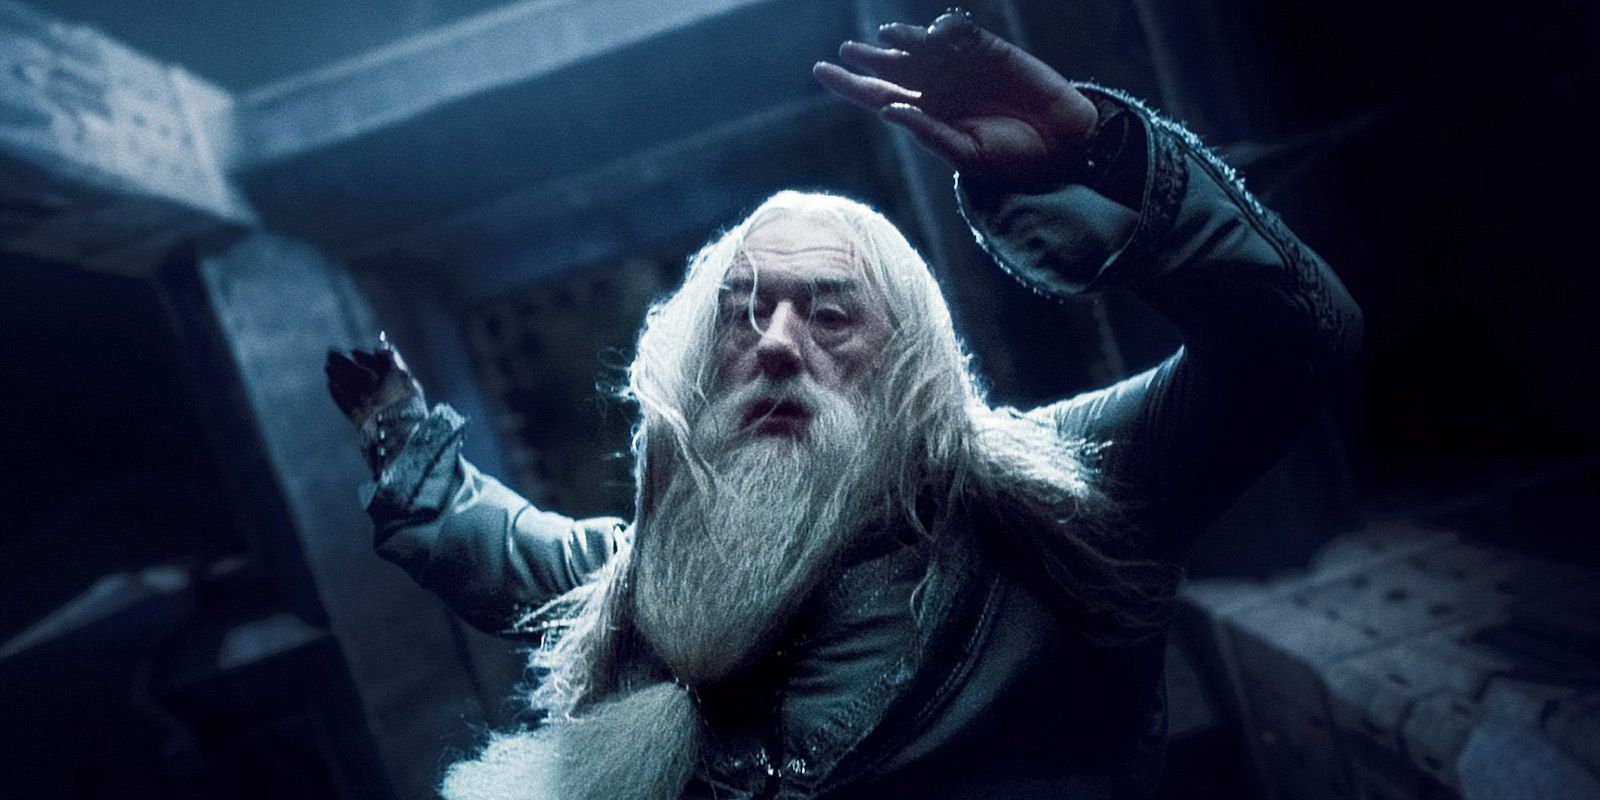 Dumbledore's death scene in Half-Blood Prince